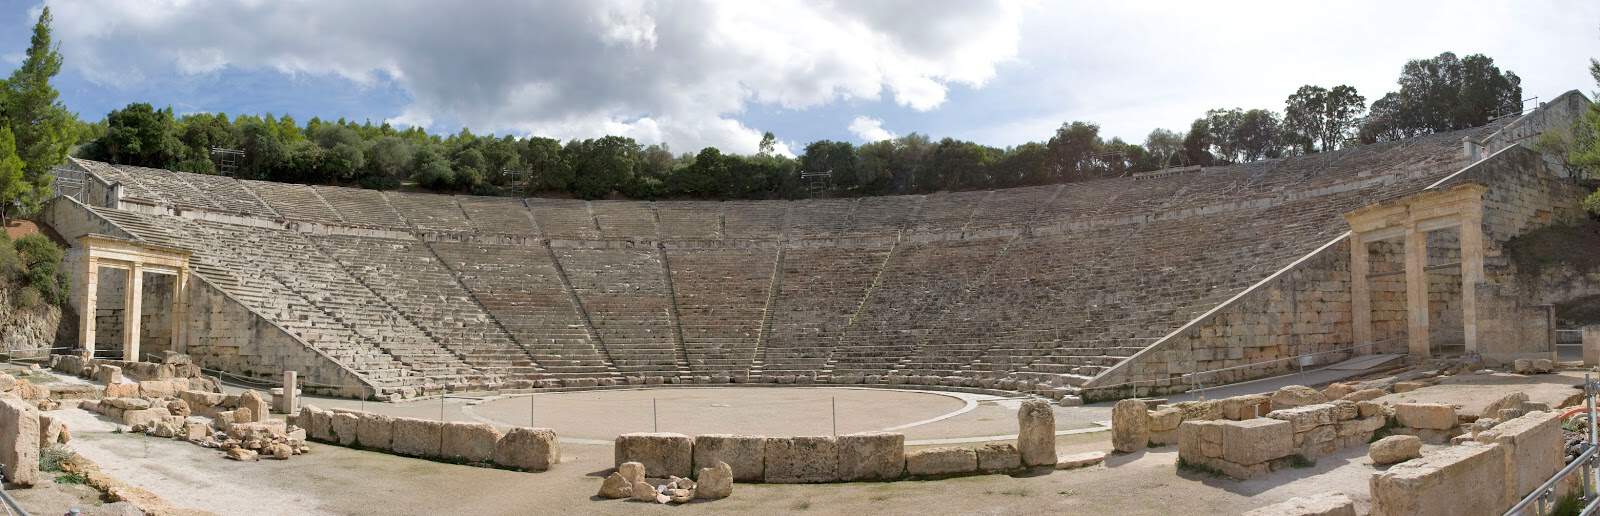 epidaurus theater ancient theater athens 2004 (3)